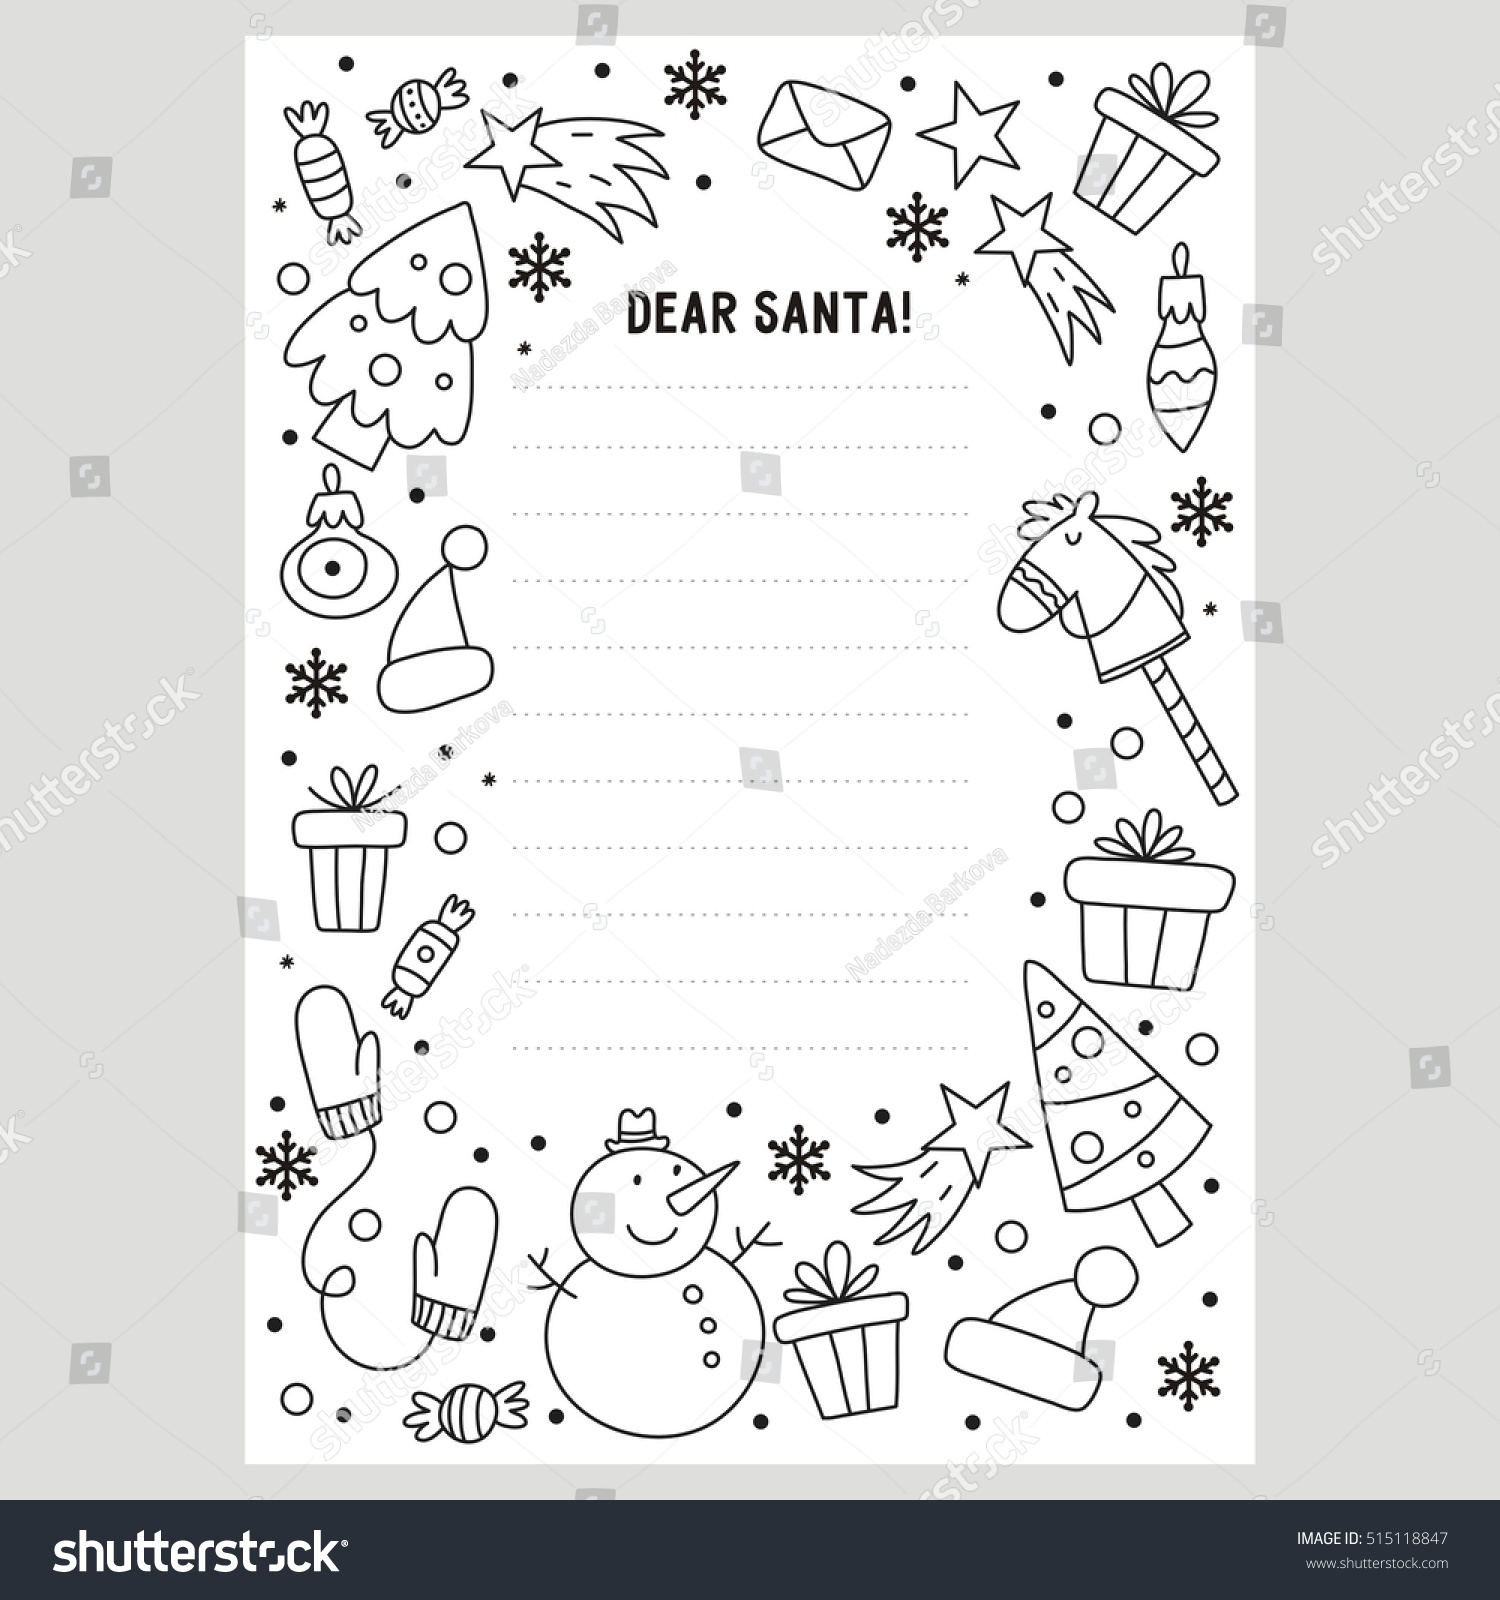 Dear Santa Letter Coloring Page Stock Vector 515118847 - Shutterstock